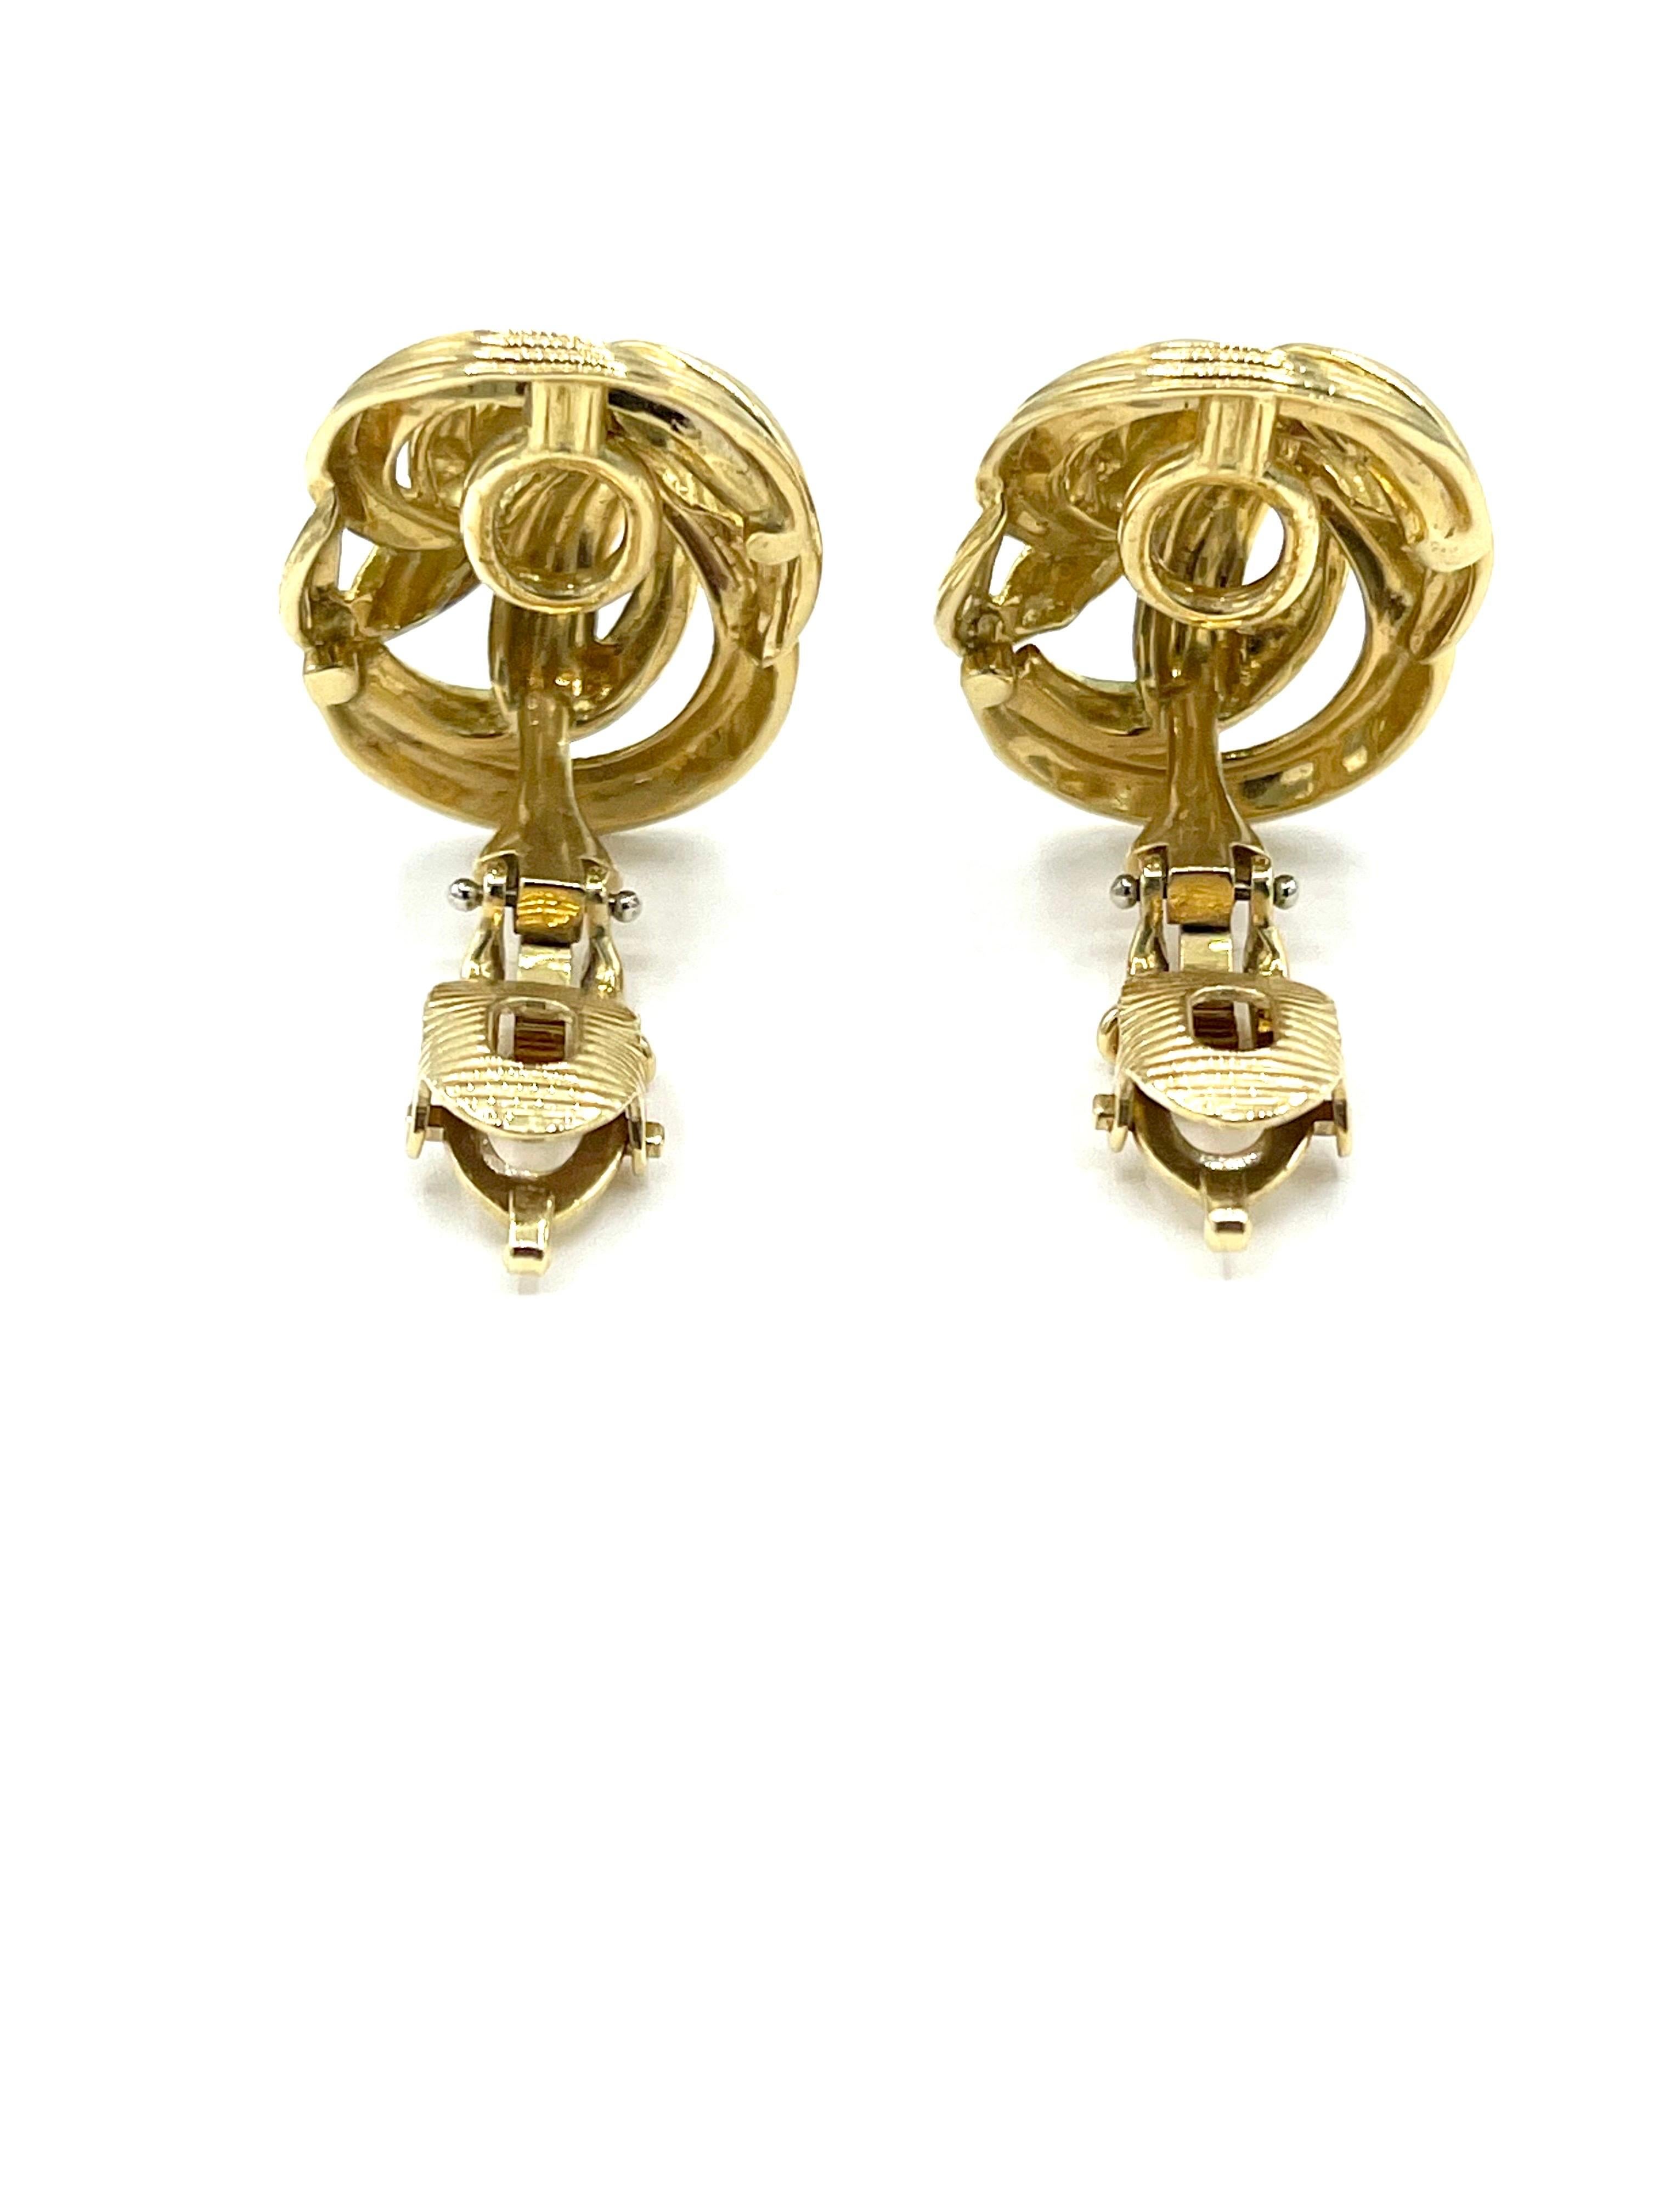 tiffany knot earrings white gold